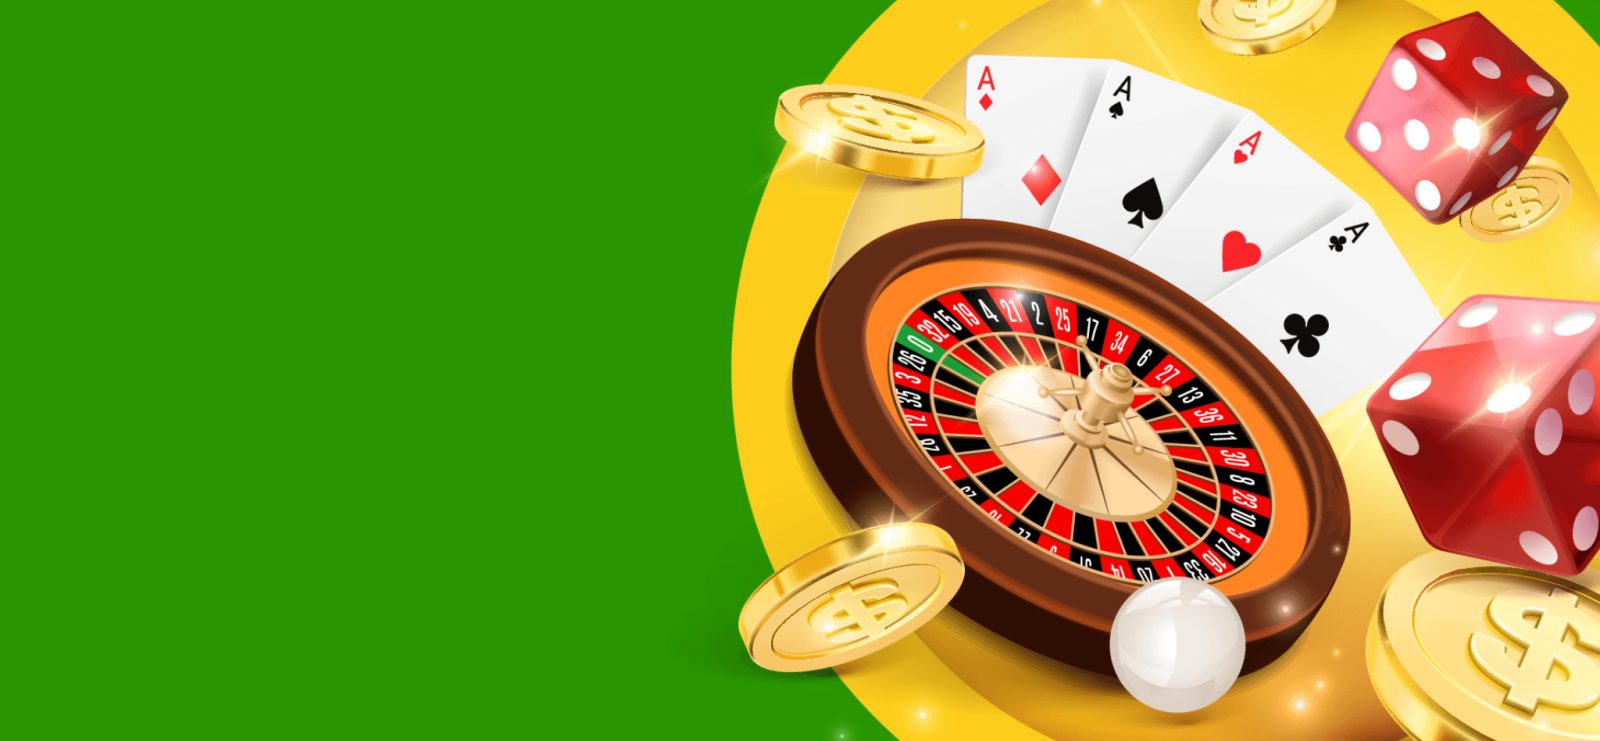 Online Casino Games: Play Pokies, Table Games & More at Joe Fortune